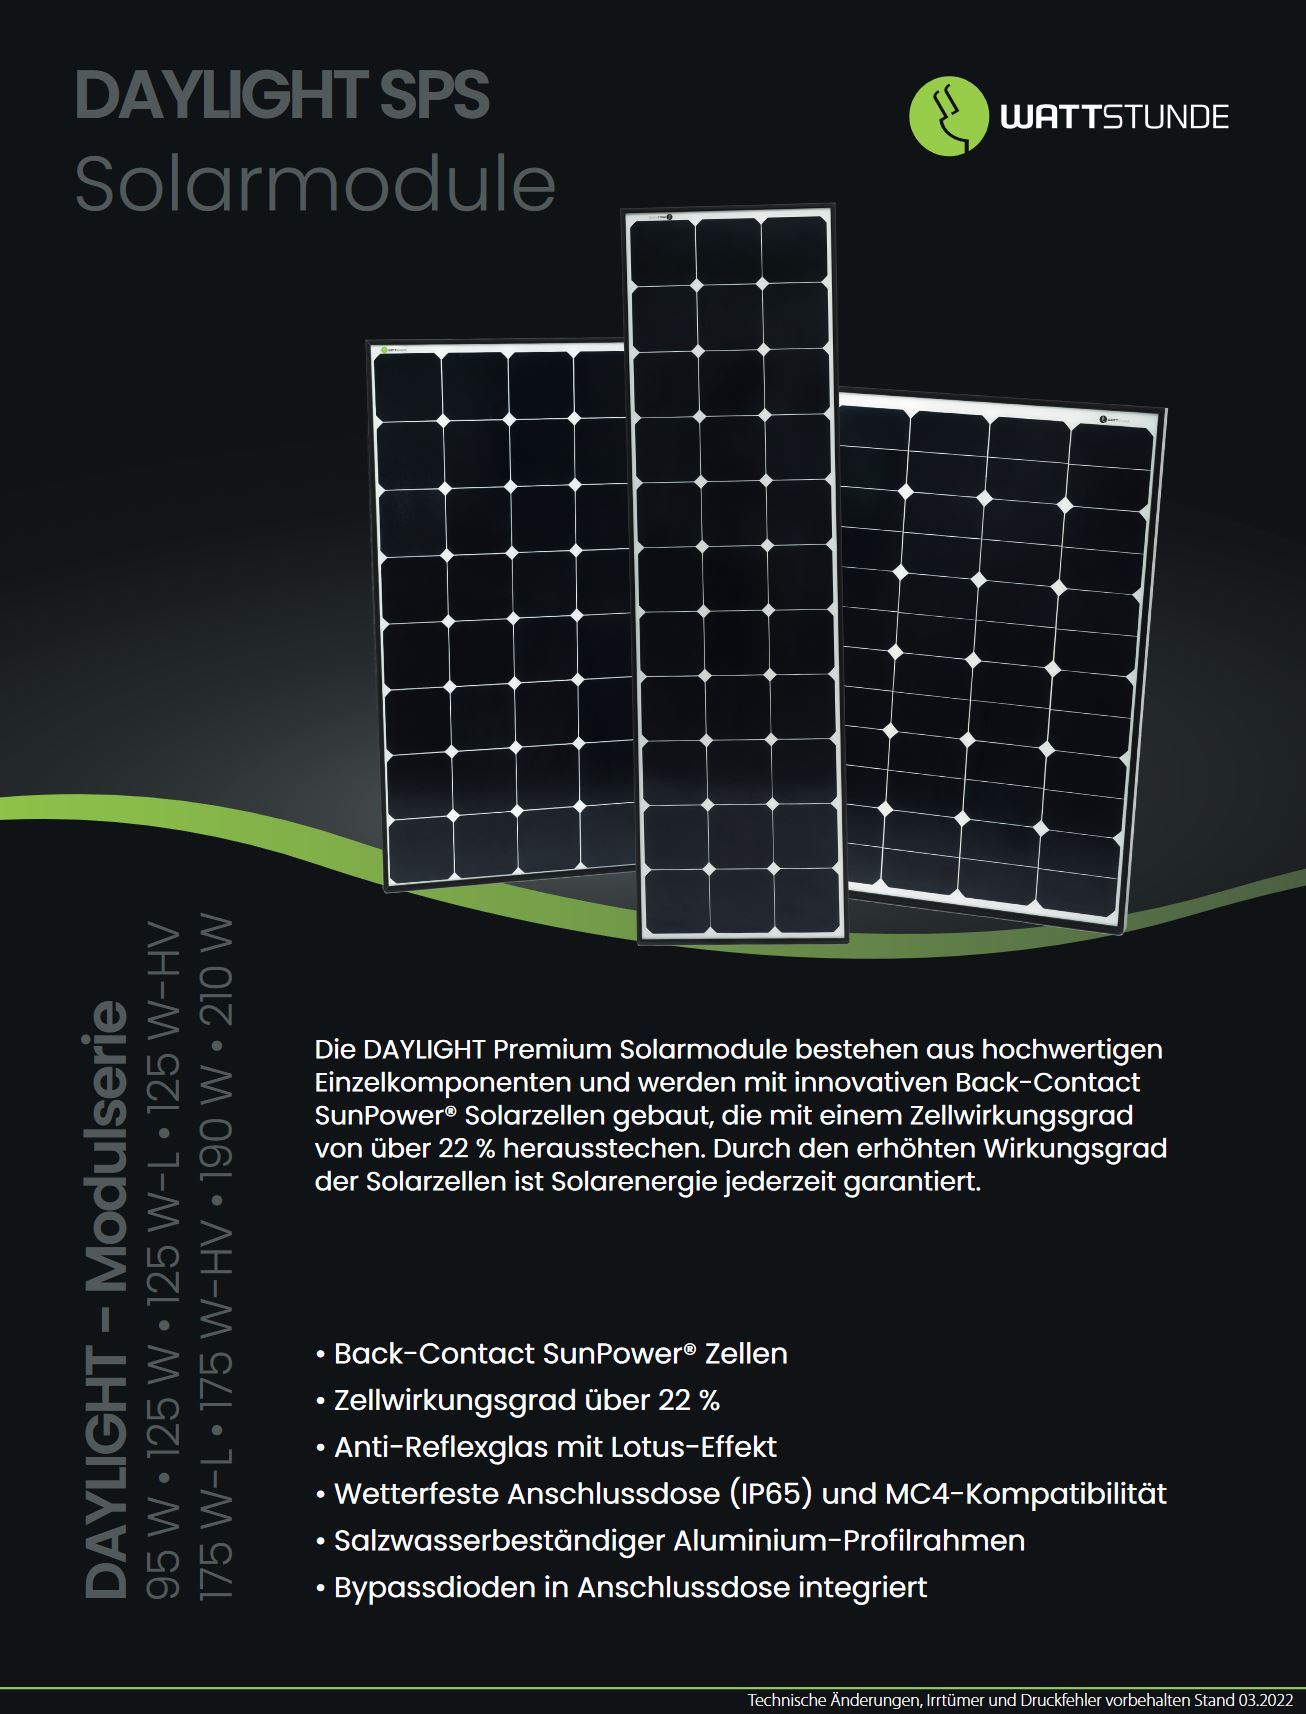 WATTSTUNDE : WATTSTUNDE® WS125SPS-L DAYLIGHT Sunpower Solarmodul 125Wp